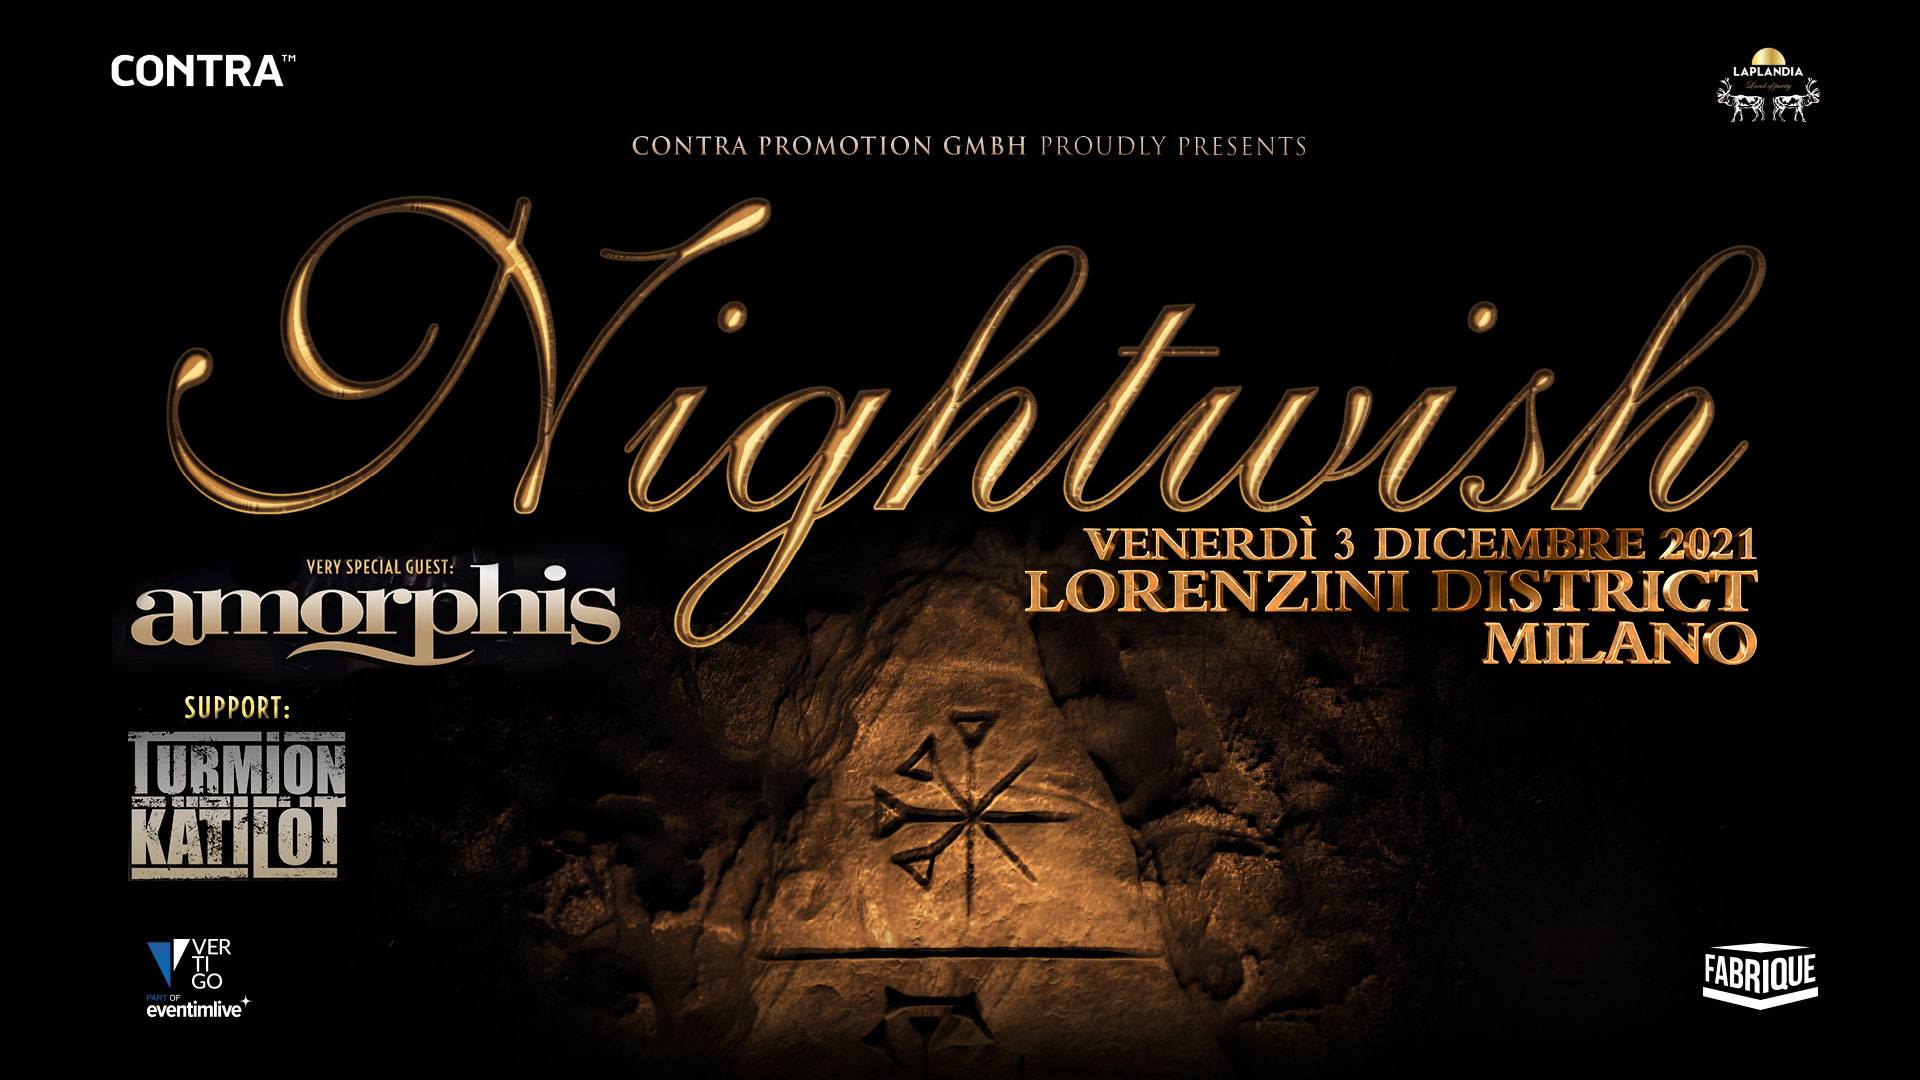 Nightwish, Lorenzini District Milano